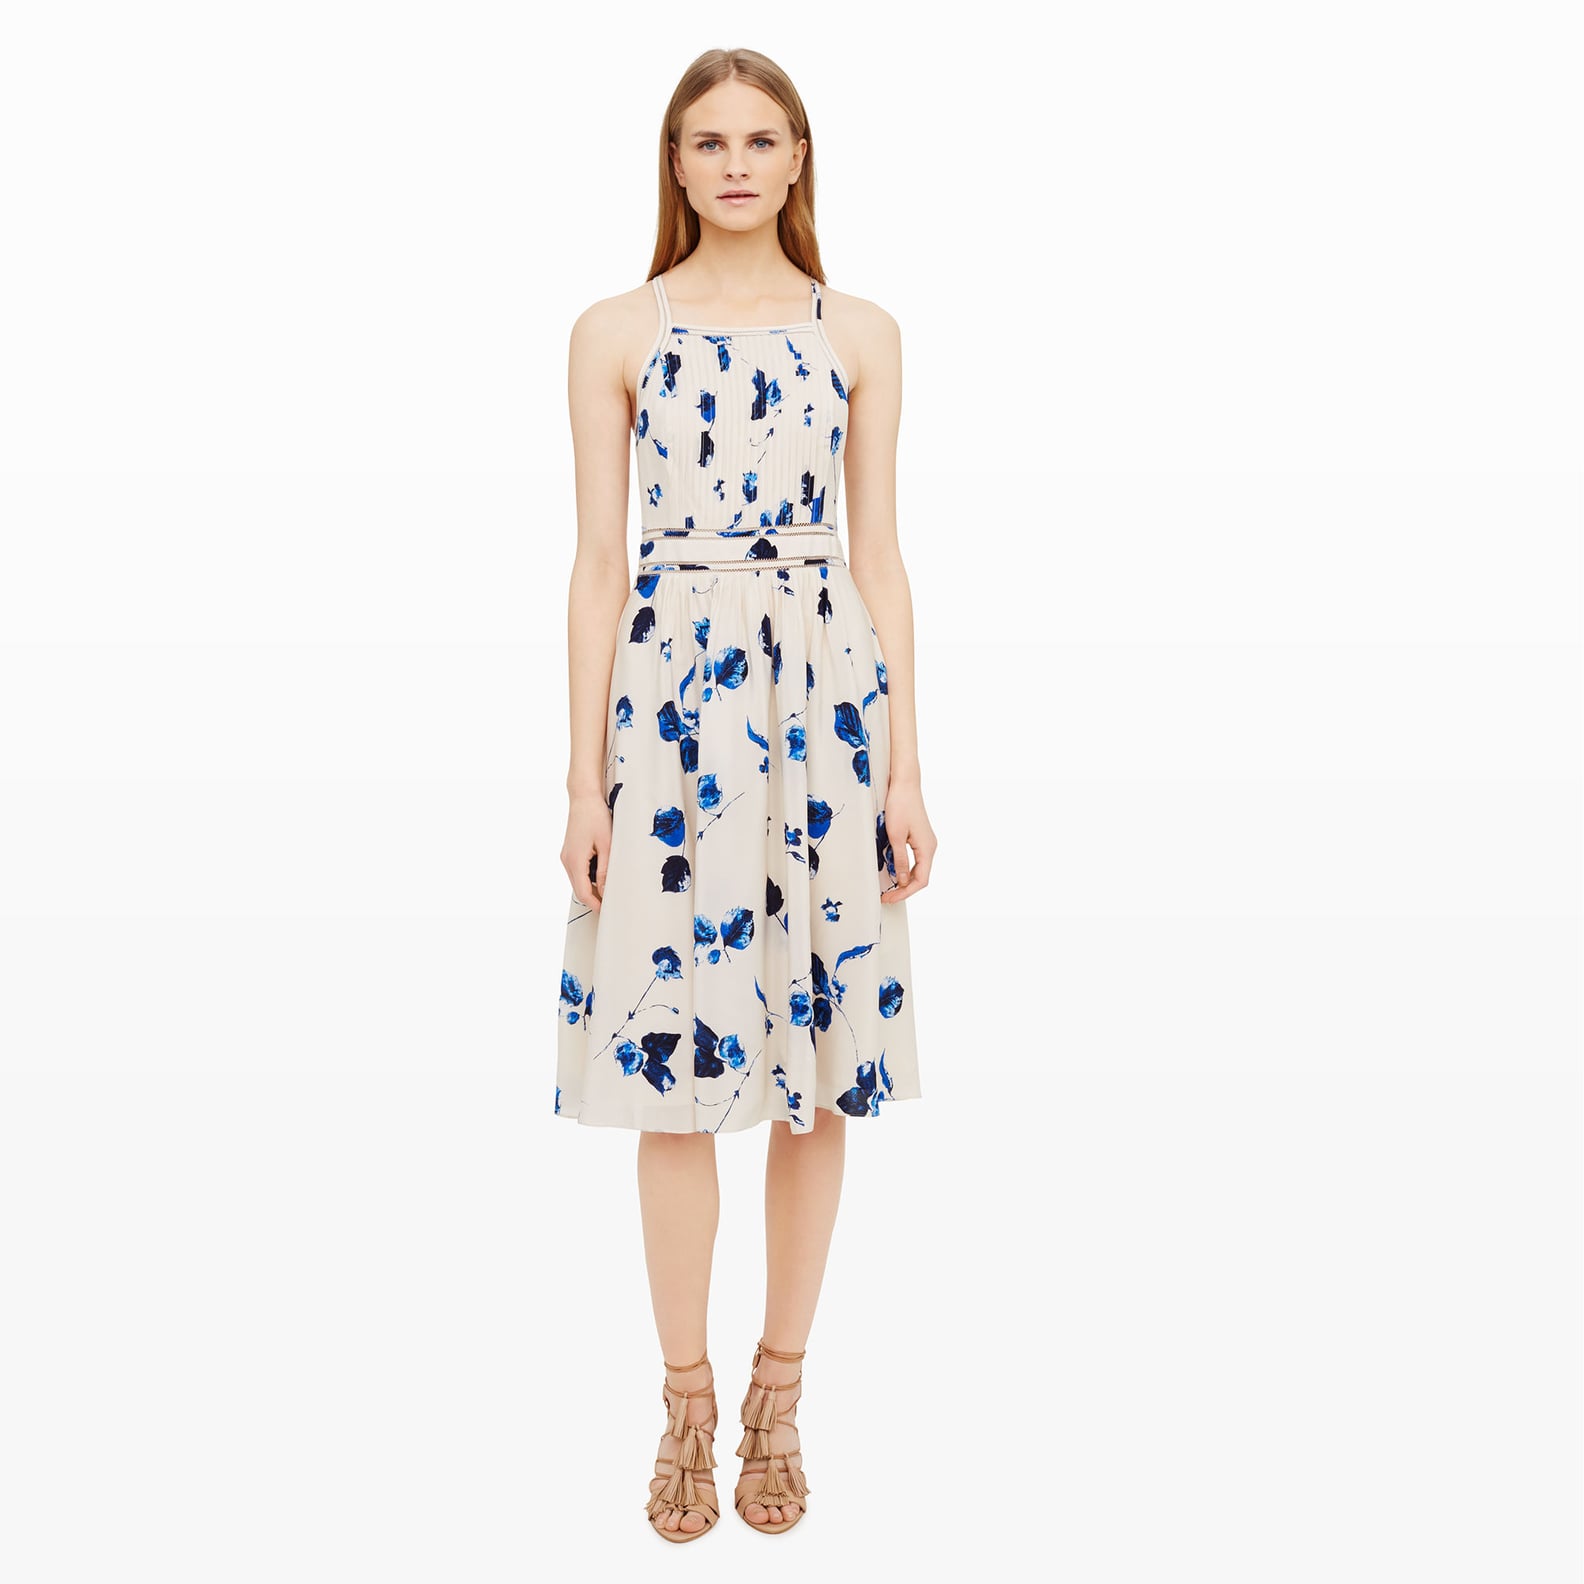 Modest Spring Dresses | POPSUGAR Fashion